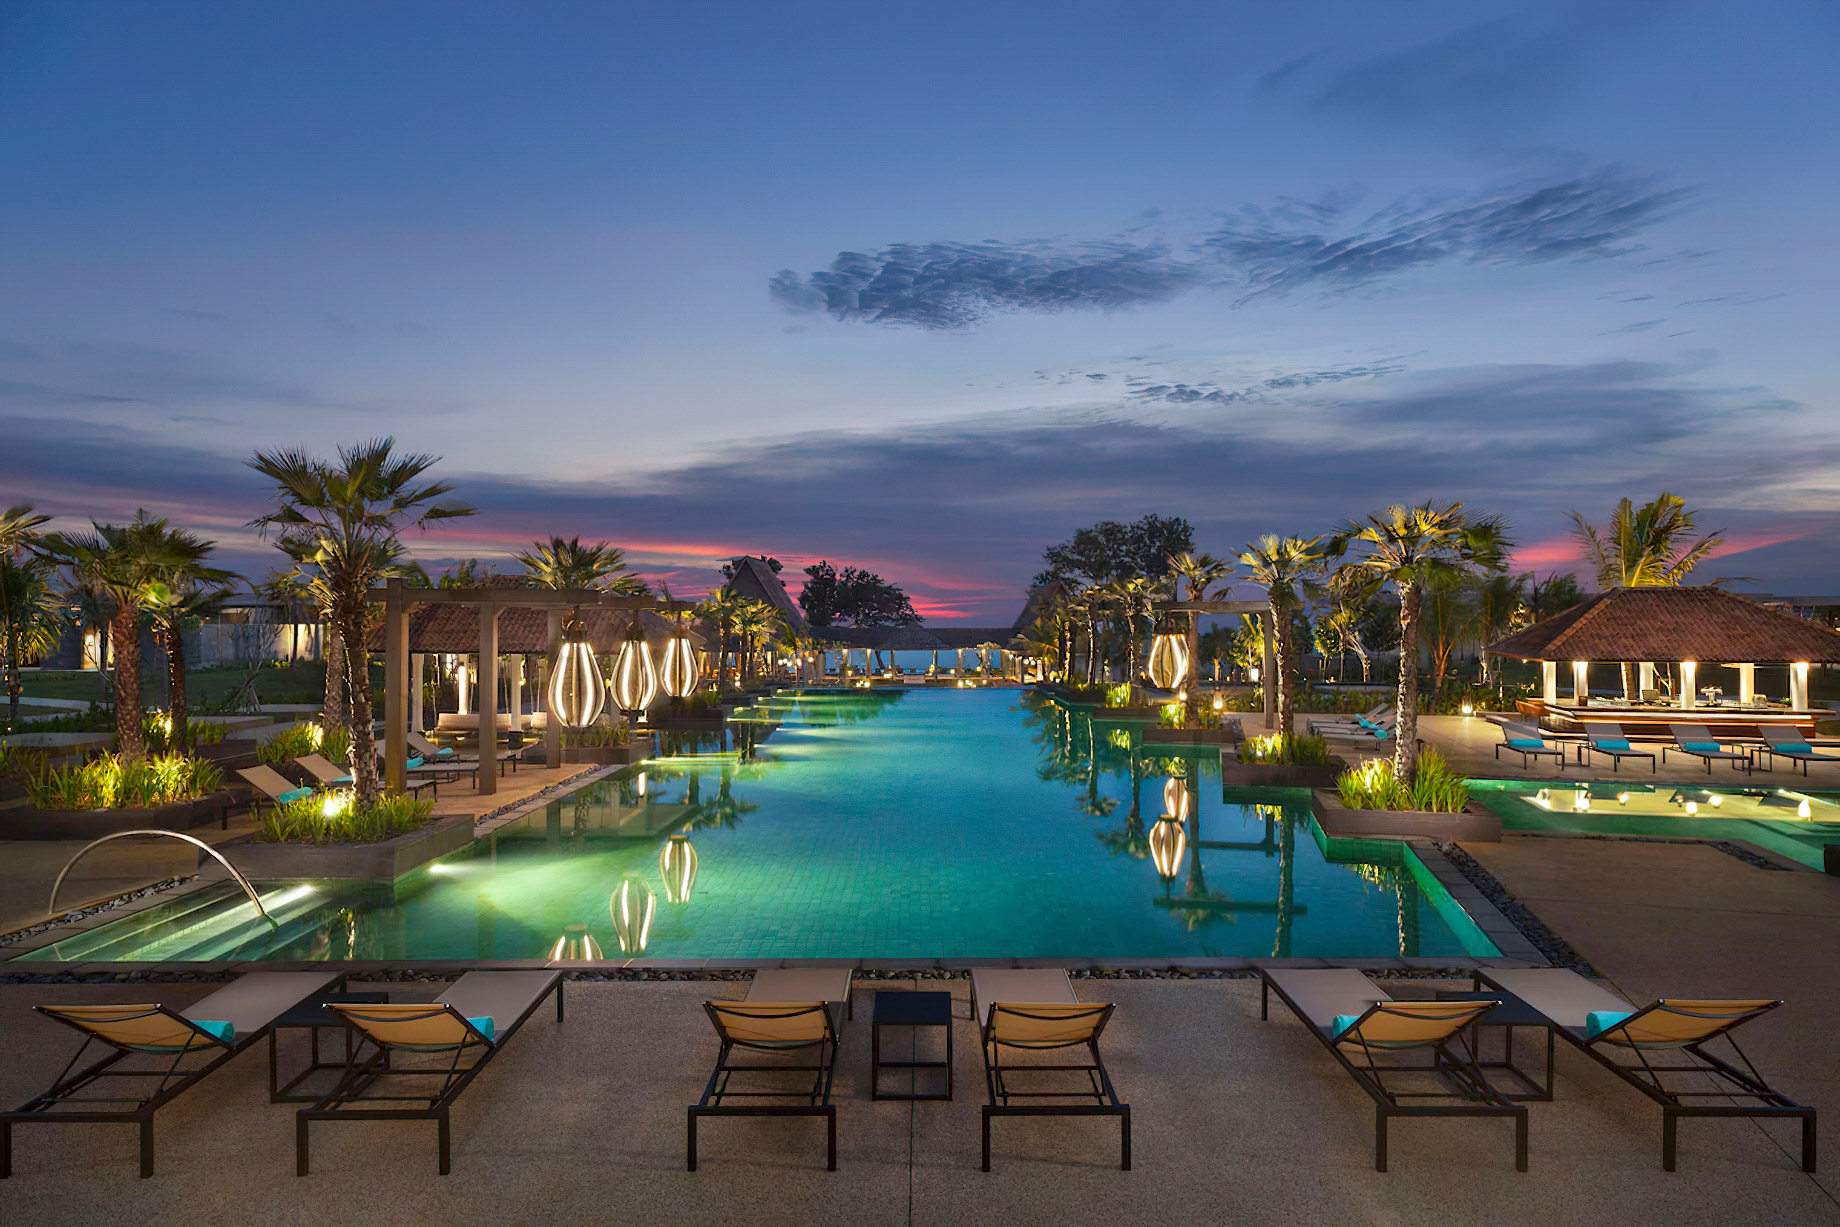 Anantara Desaru Coast Resort & Villas - Johor, Malaysia - Resort Pool Deck Sunset